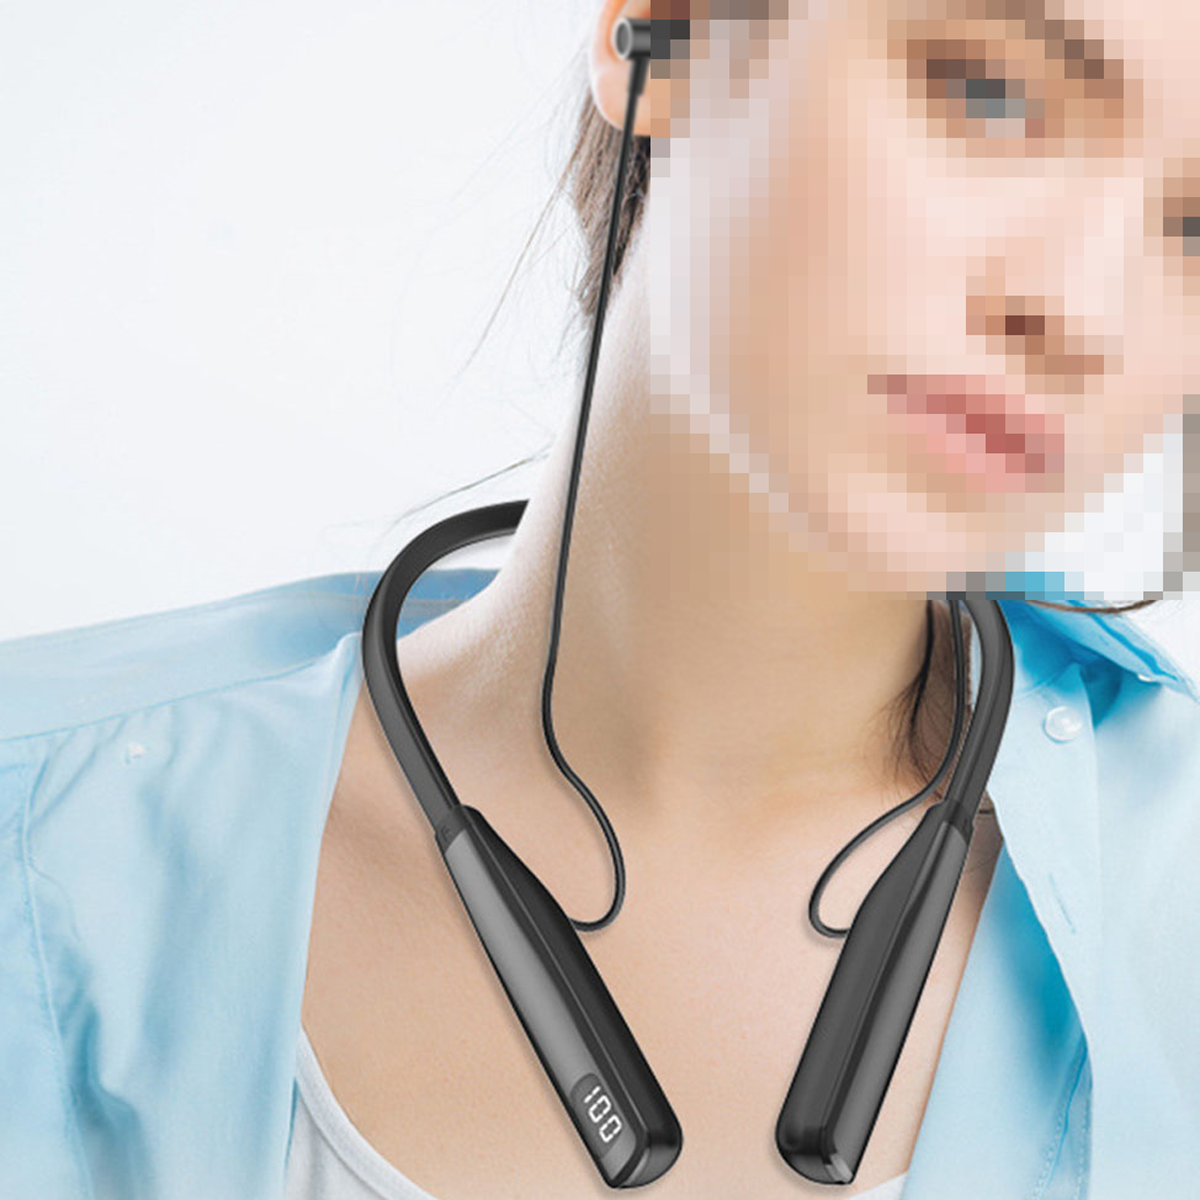 ENBAOXIN Bluetooth-Headset - In-ear ohne um Tragen den Schmerzen, Bluetooth langes Standby, Hals, langer Lila Bluetooth Kopfhörer